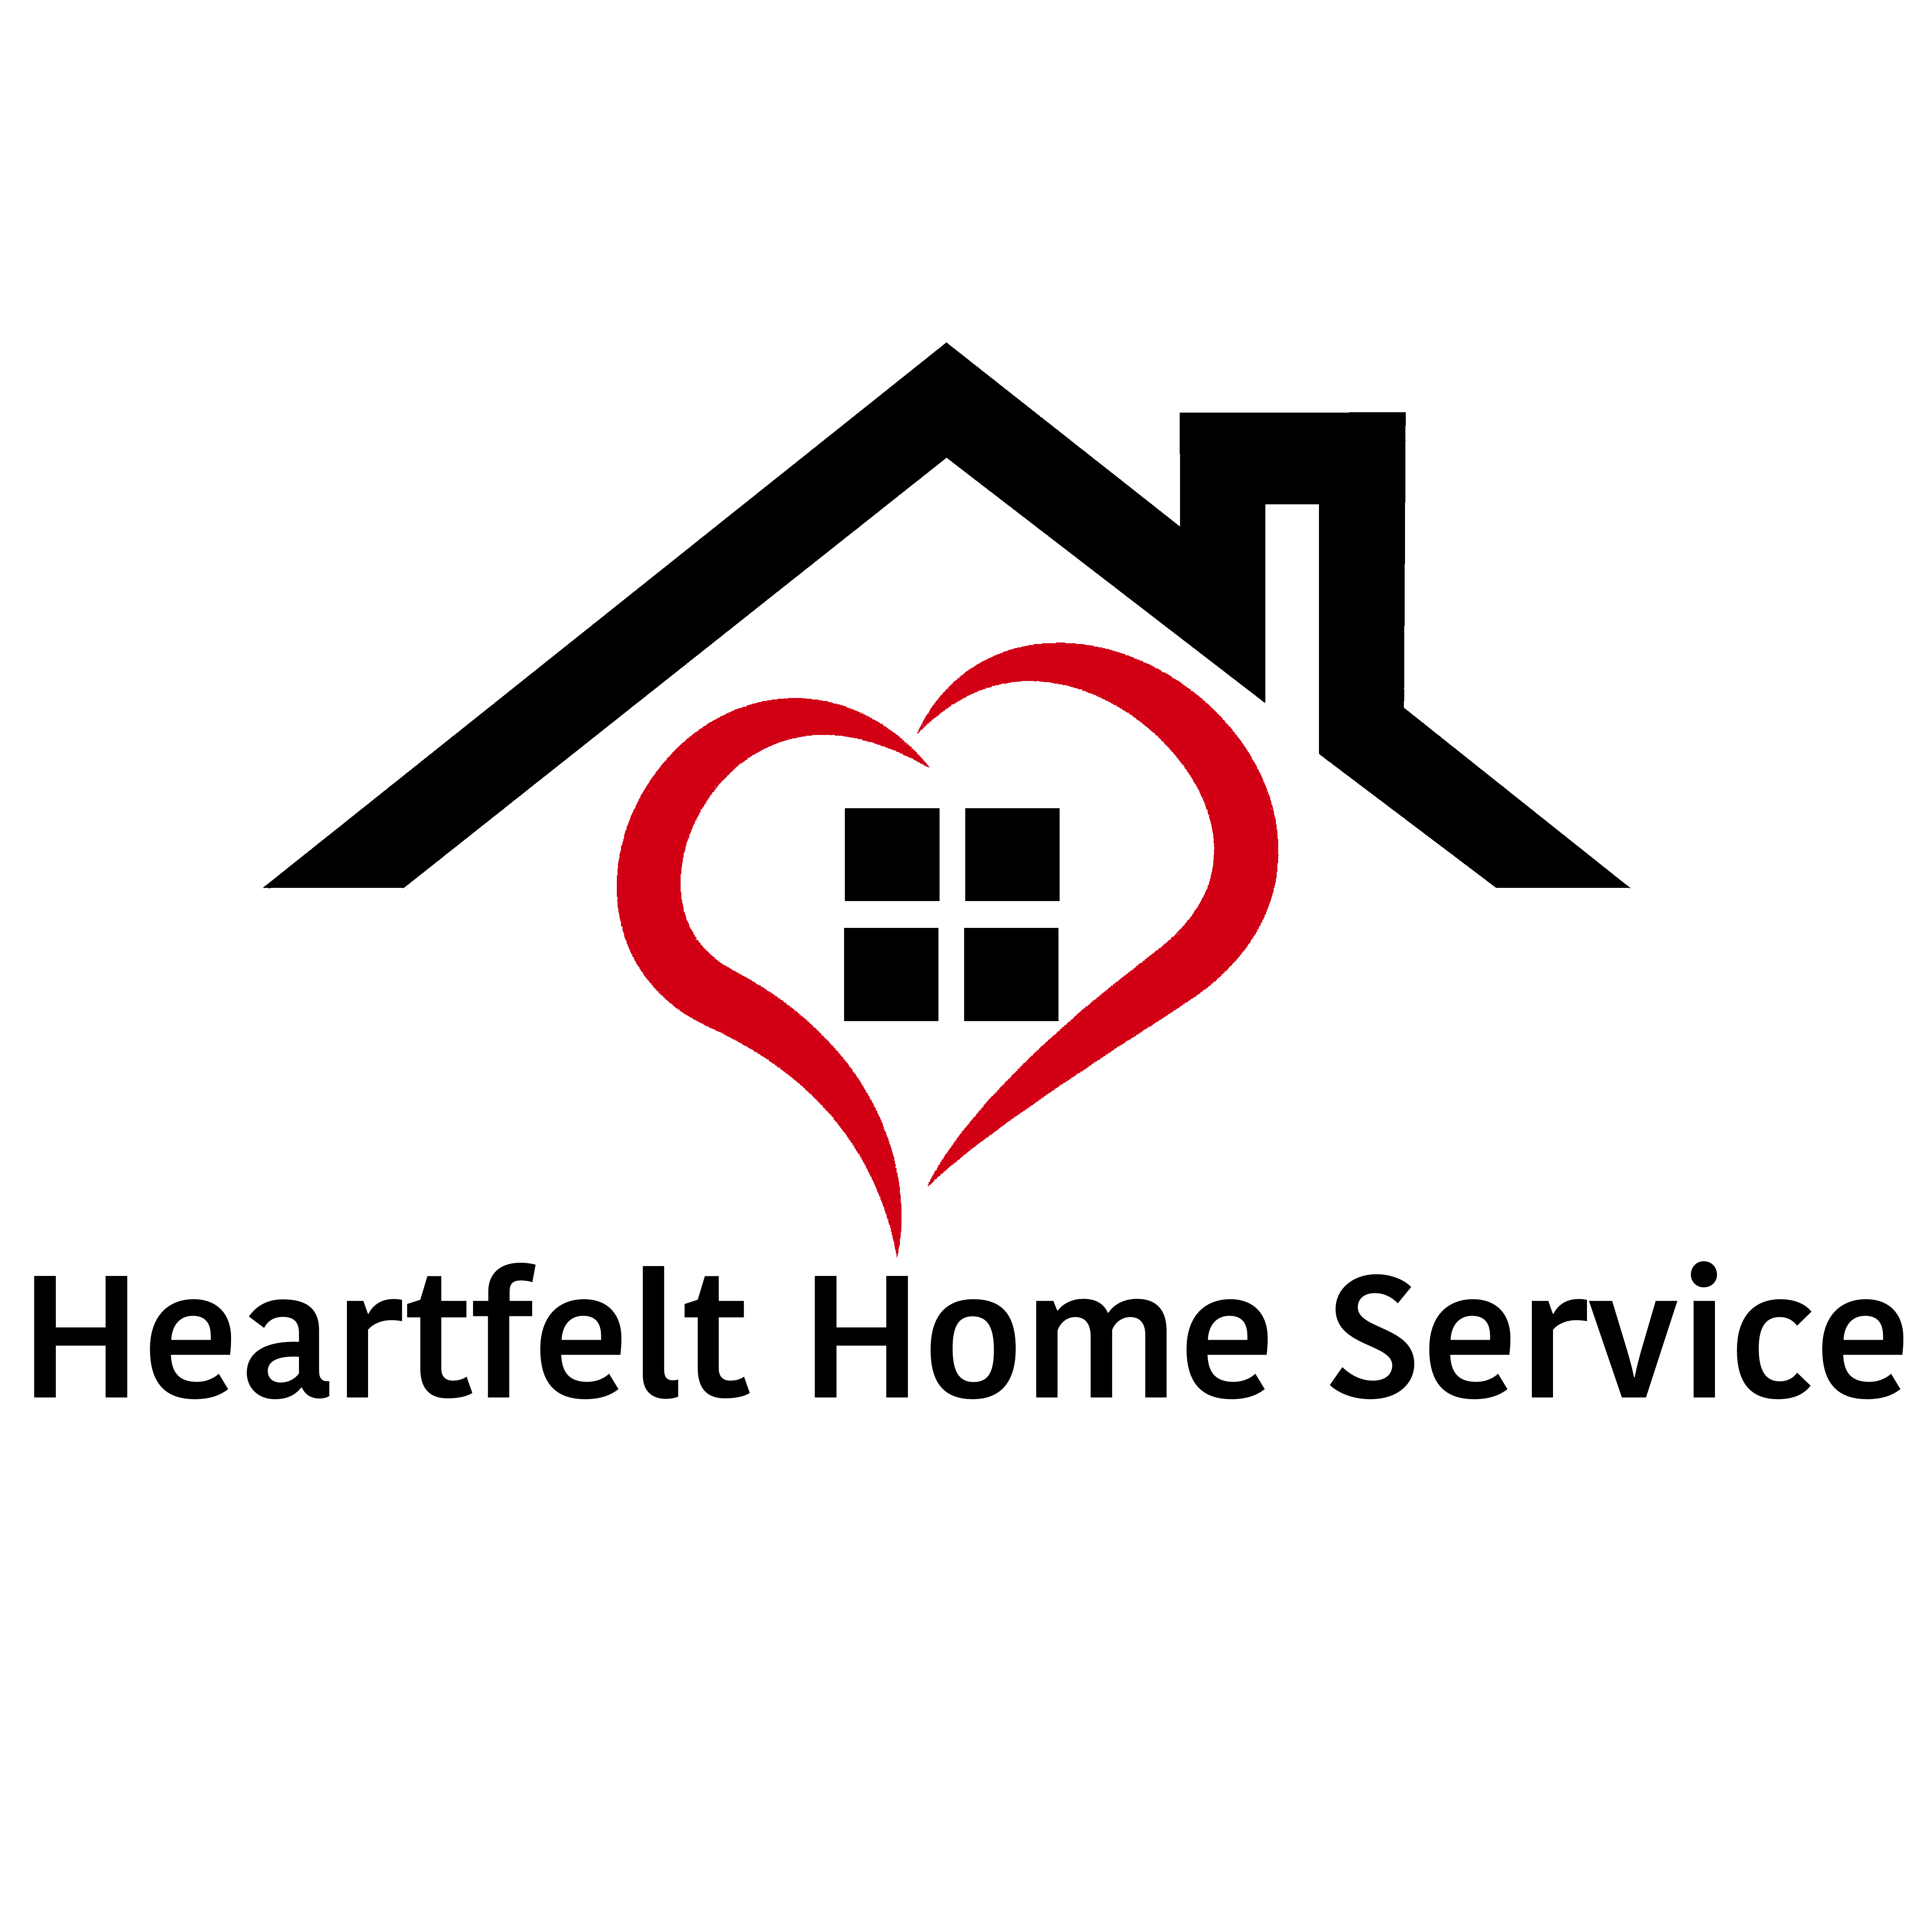 Heartfelt Home Service